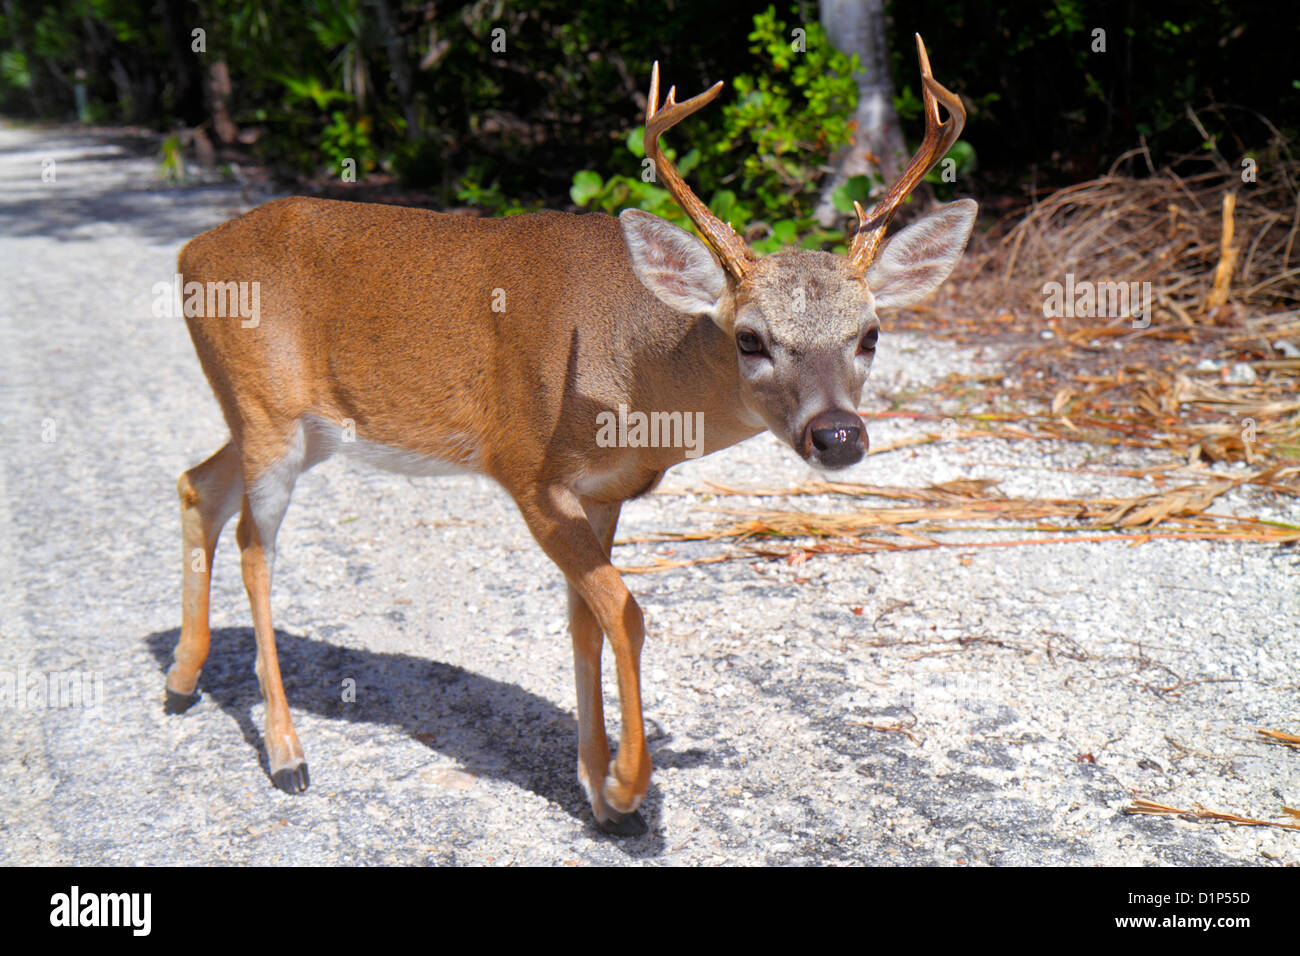 Florida keys deer -Fotos und -Bildmaterial in hoher Auflösung – Alamy